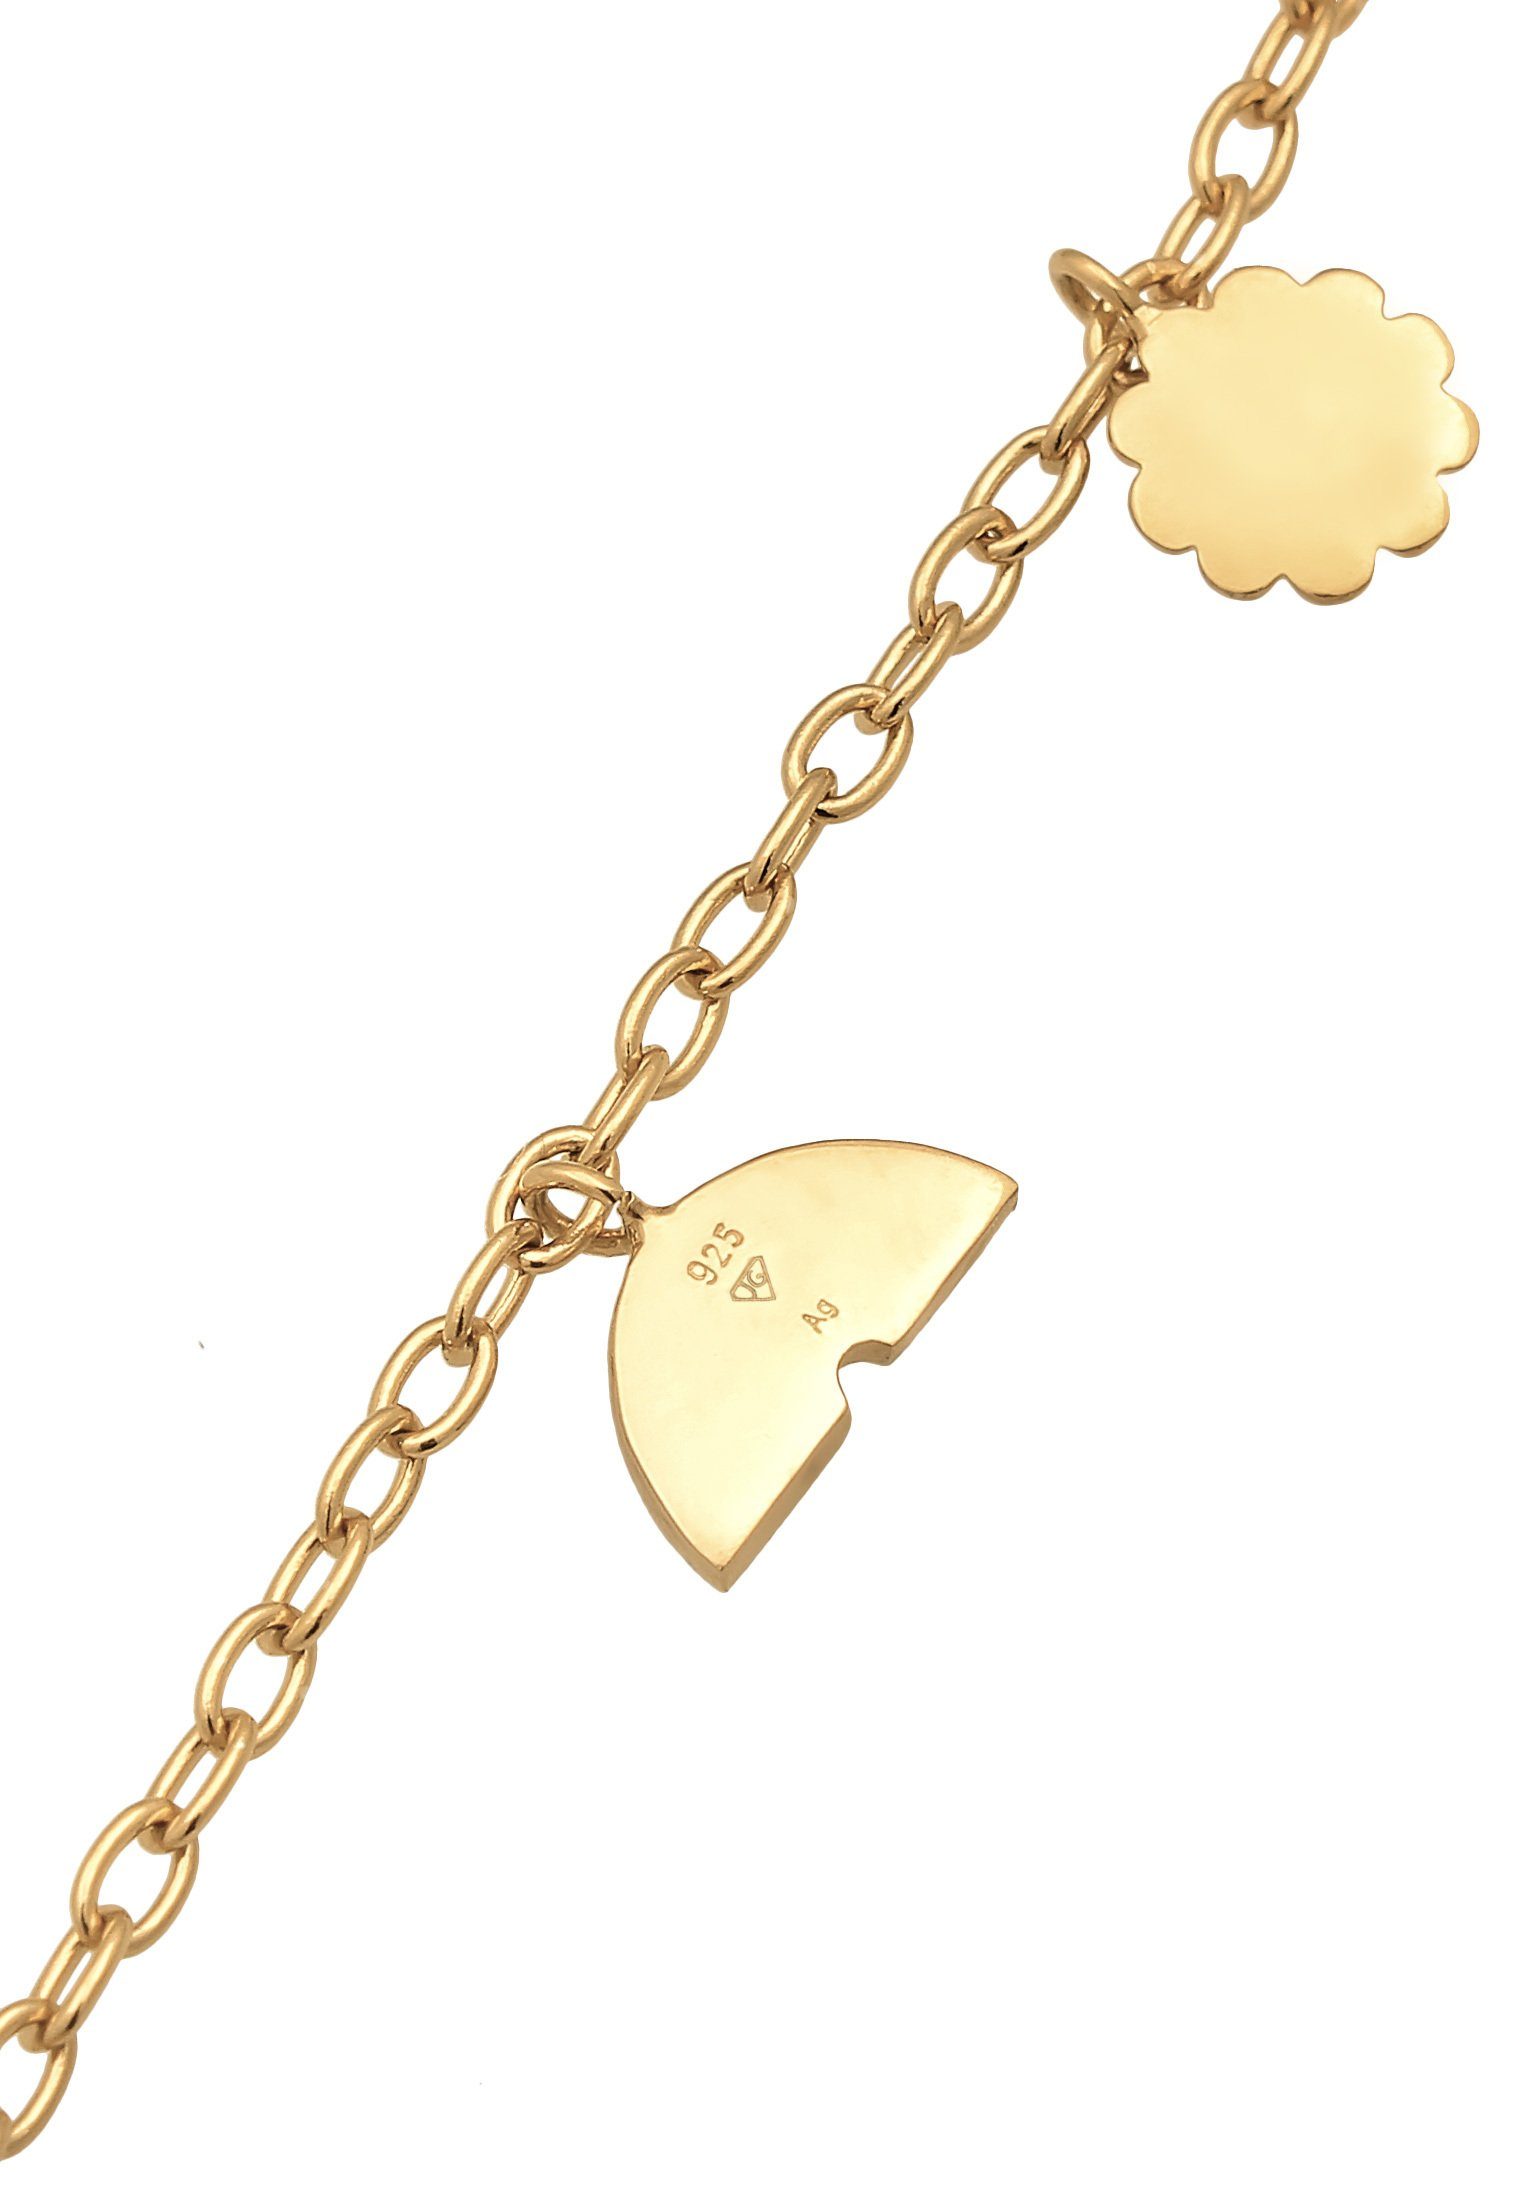 Elli Armband Gold Eis Pilz Blume Blume Anhänger 925 Silber, Smiling Emaille